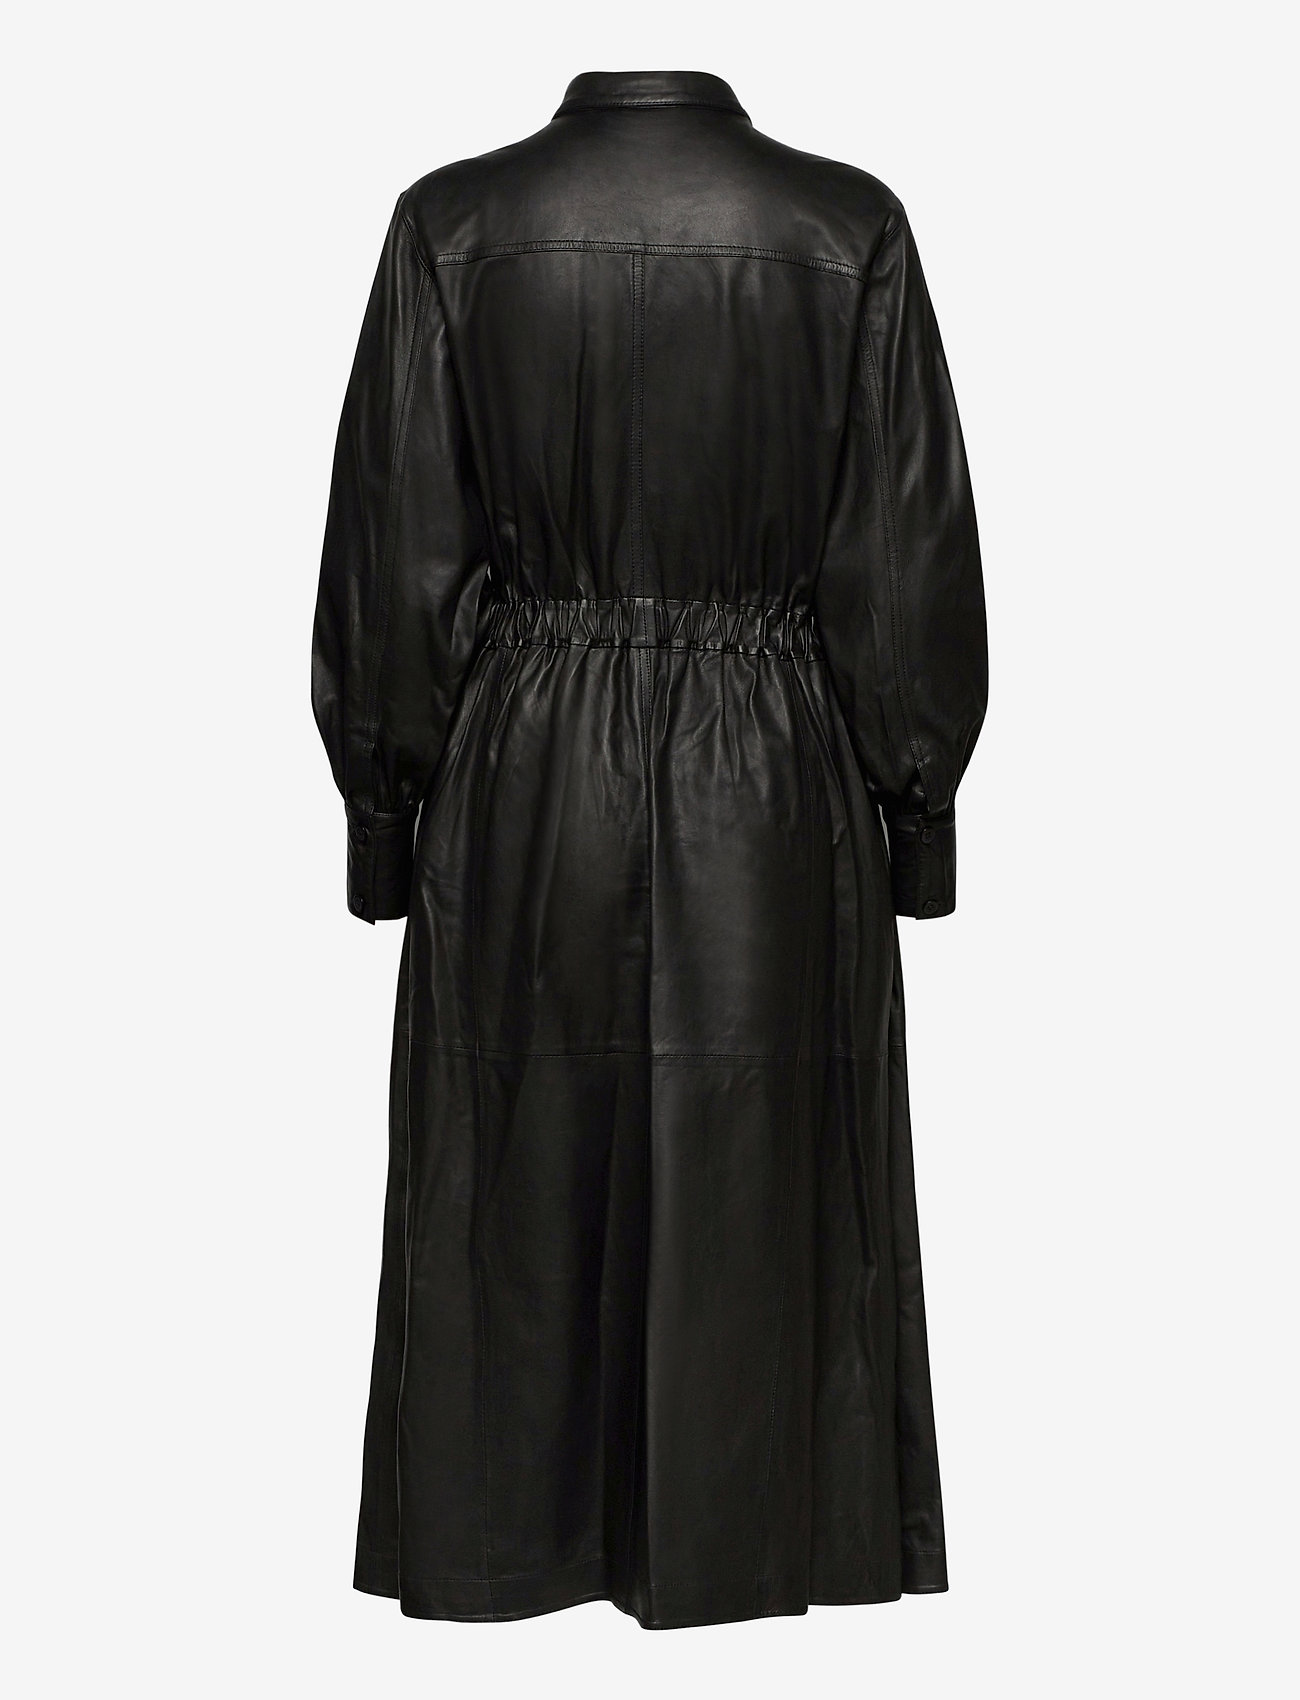 MDK / Munderingskompagniet - Lily thin leather dress - shirt dresses - black - 1